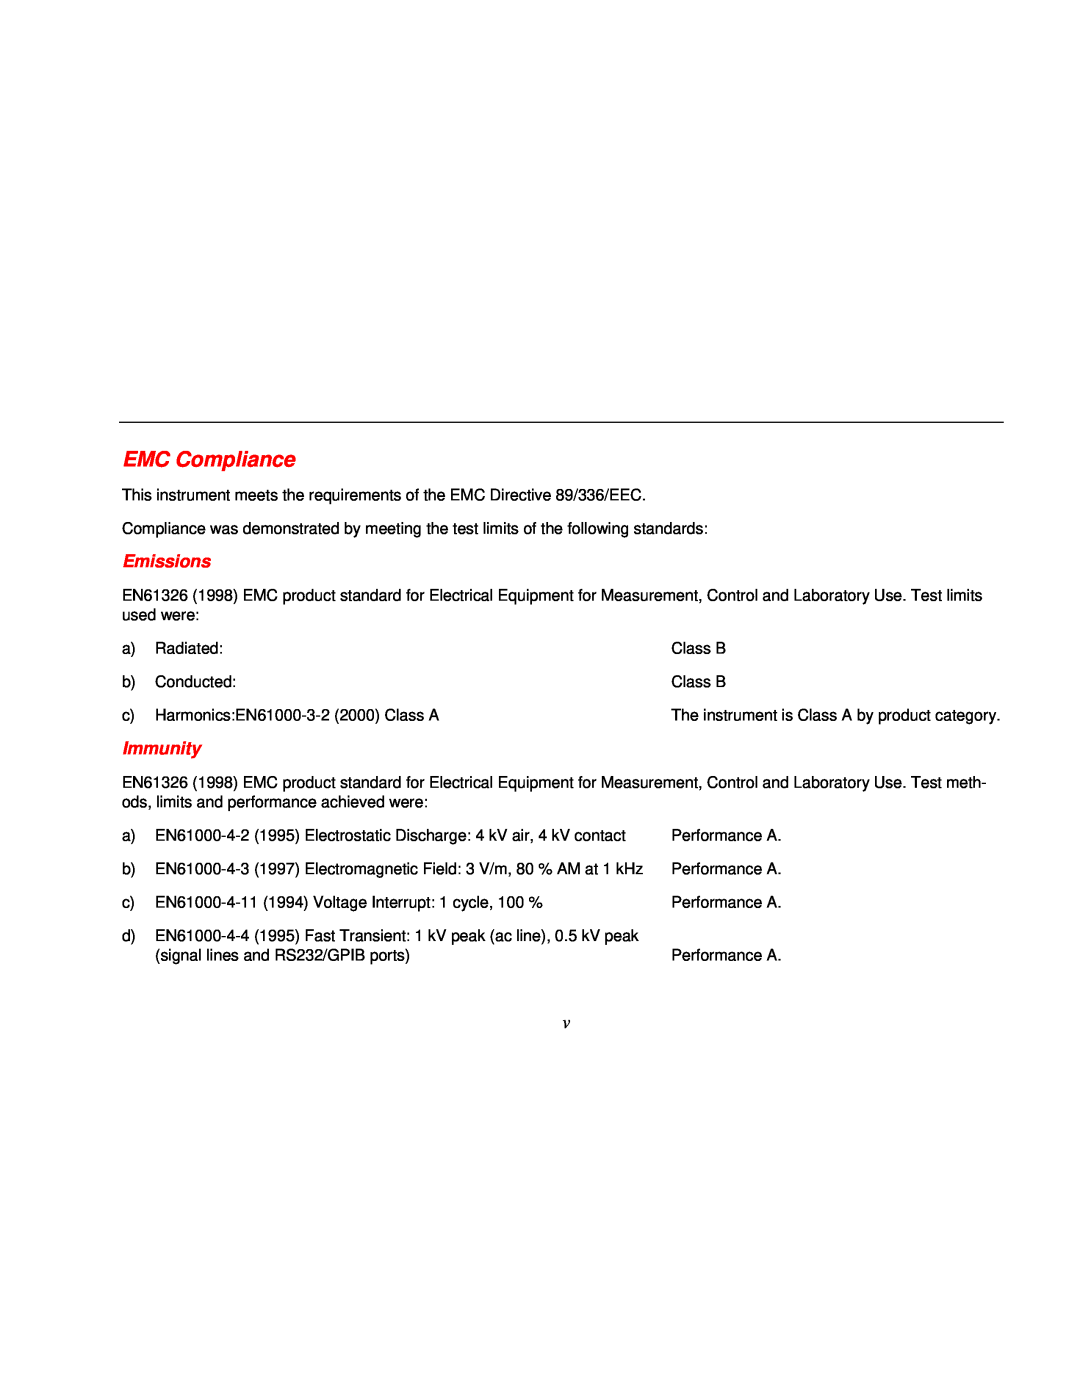 Fluke 271 manual EMC Compliance, Emissions, Immunity 